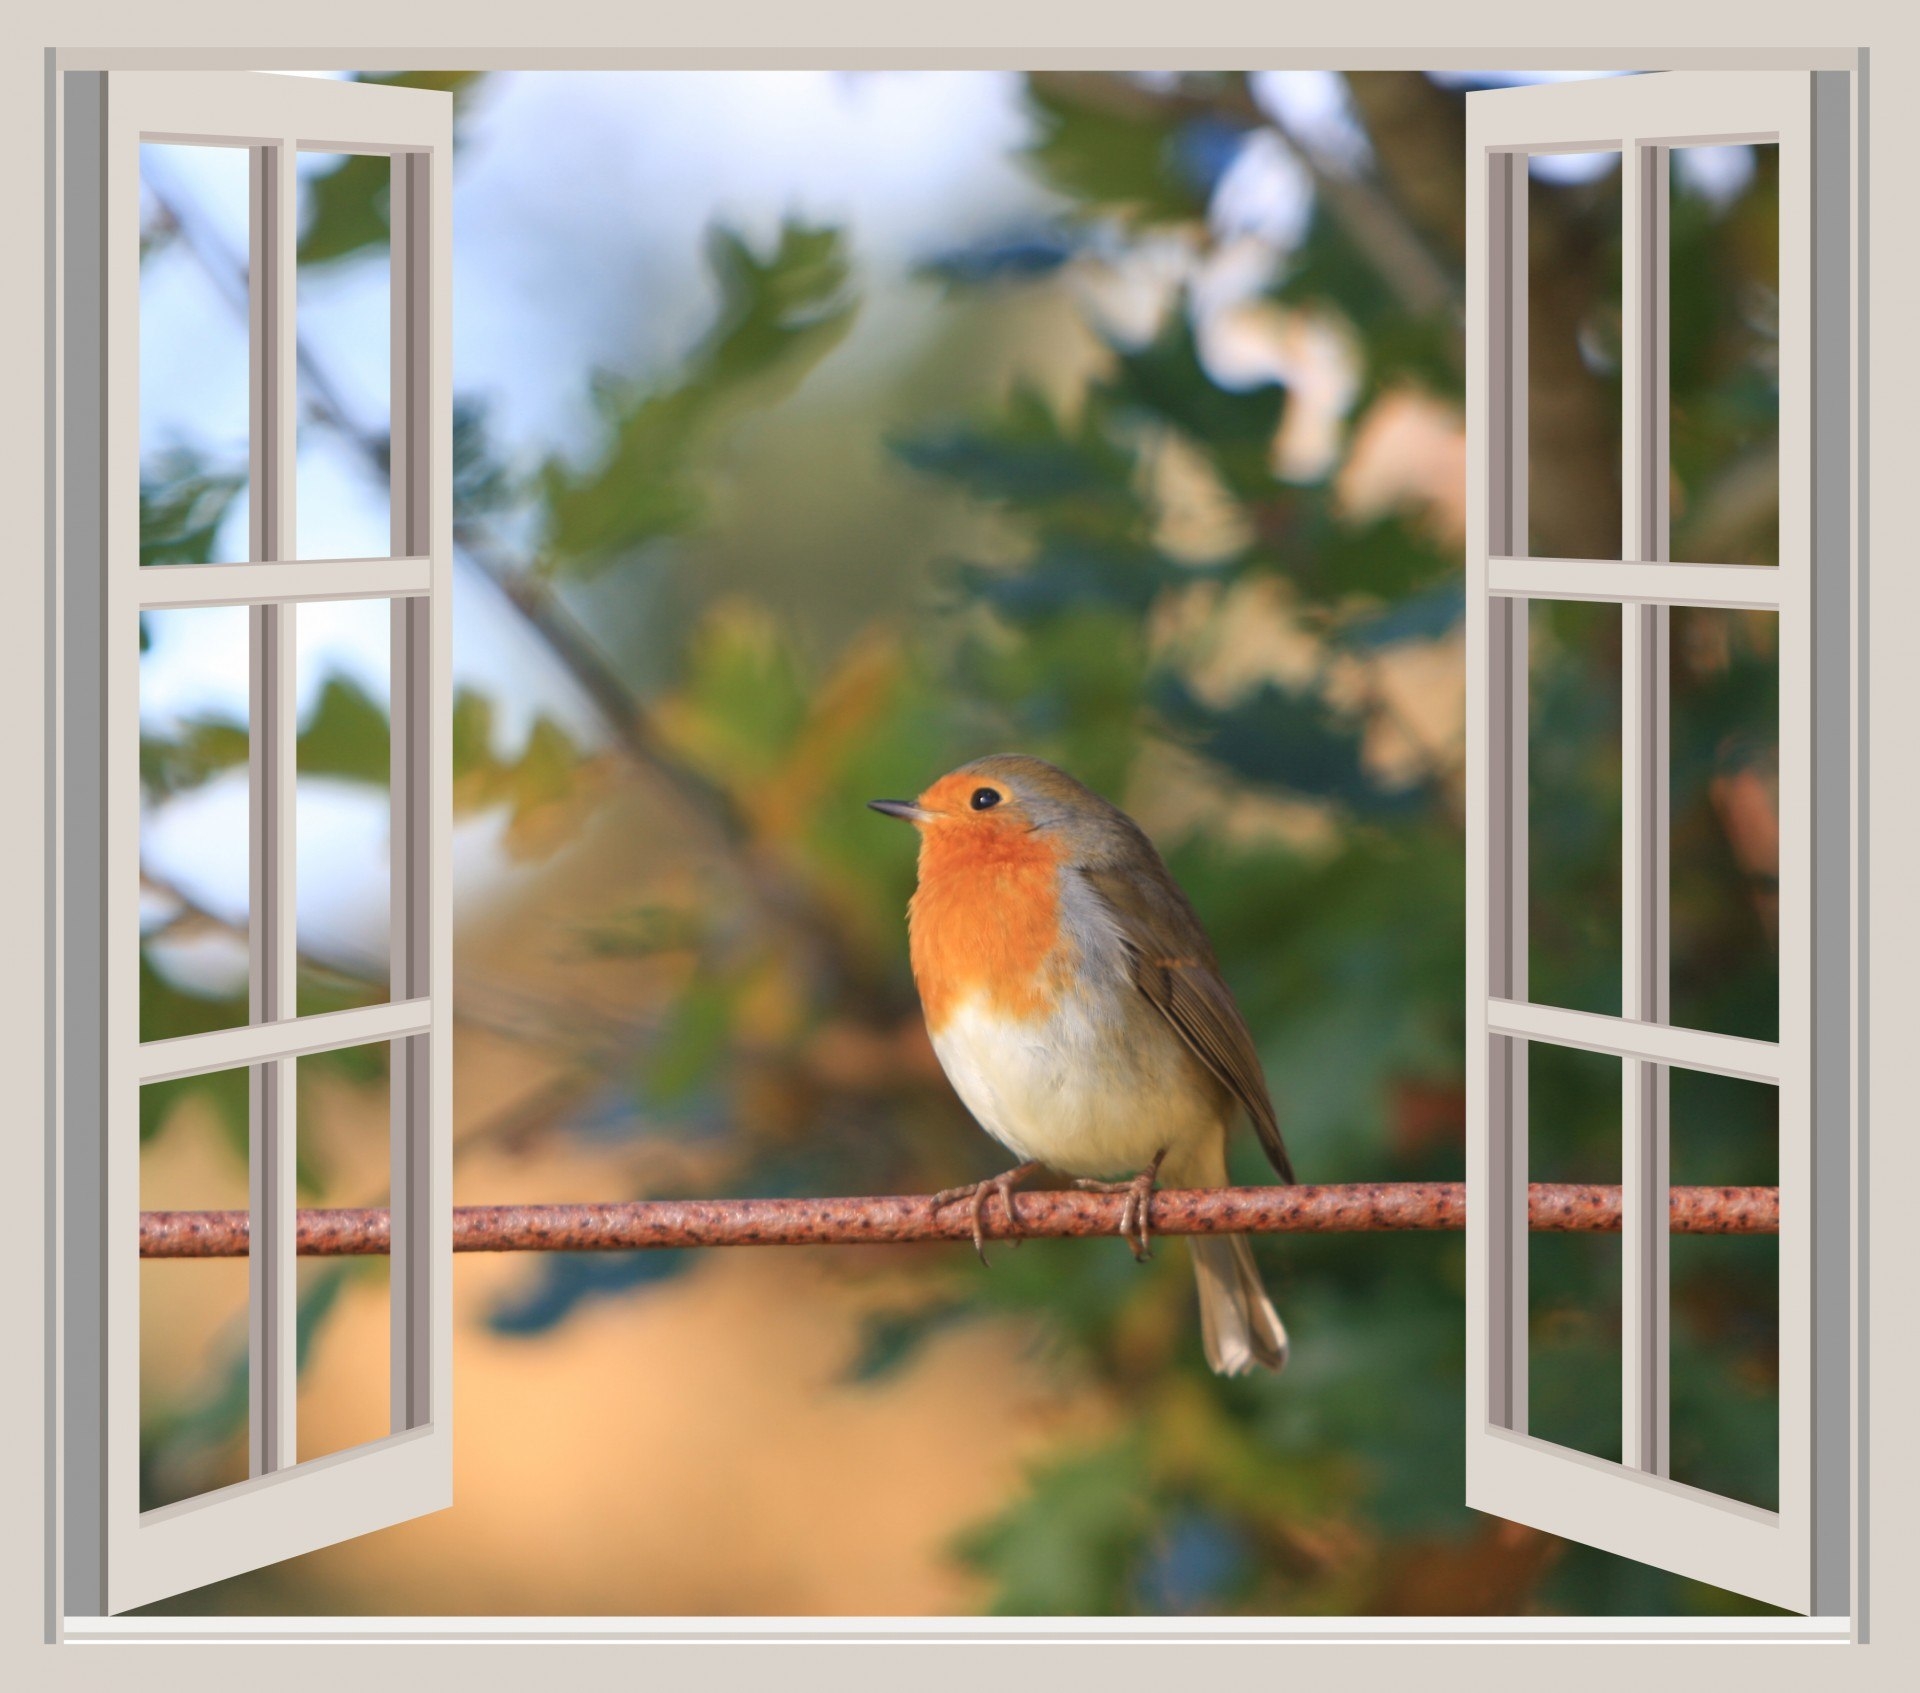 Птичка на подоконнике. Птицы на окна. Птички за окном. Утро стучит в окно